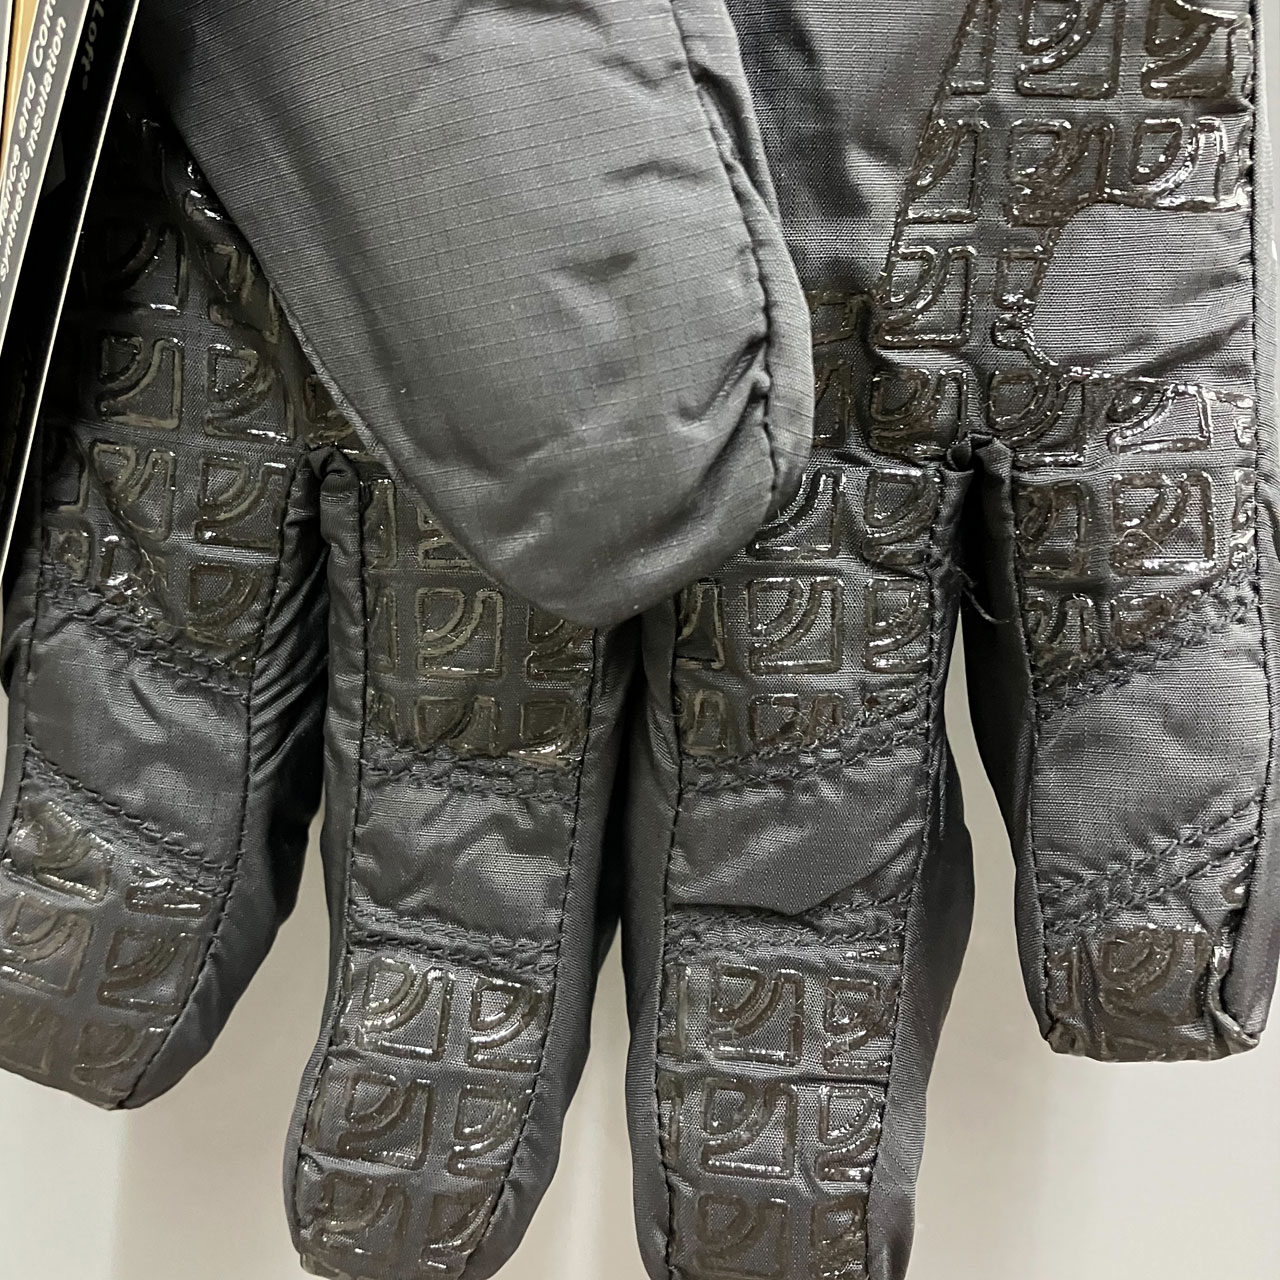 【Trekmates】Gore-tex女（黑）Primaloft羊毛內裡保暖手套【黑雨名店】機能手套 機能型防護手套 機車女式GLV007M(黑)